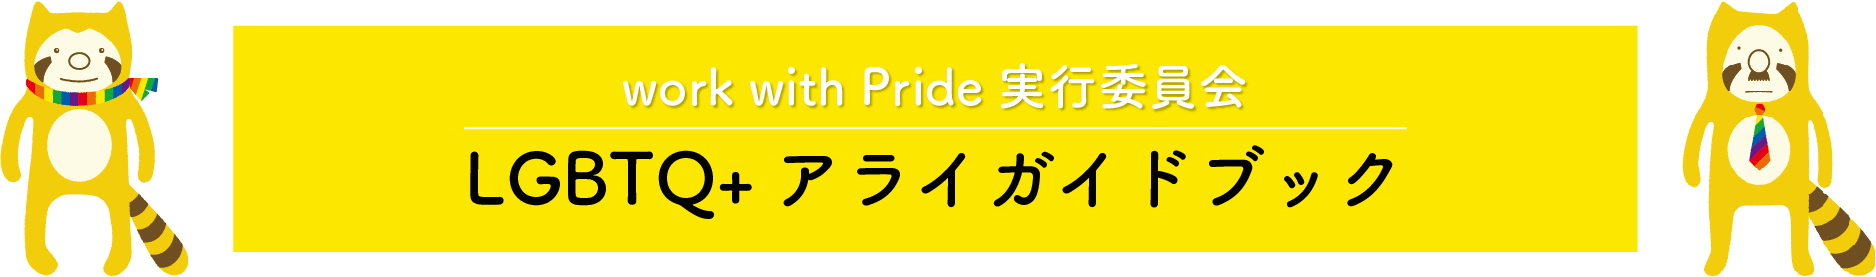 work with Pride 2022実行委員会 LGBTQ+アライガイドブック